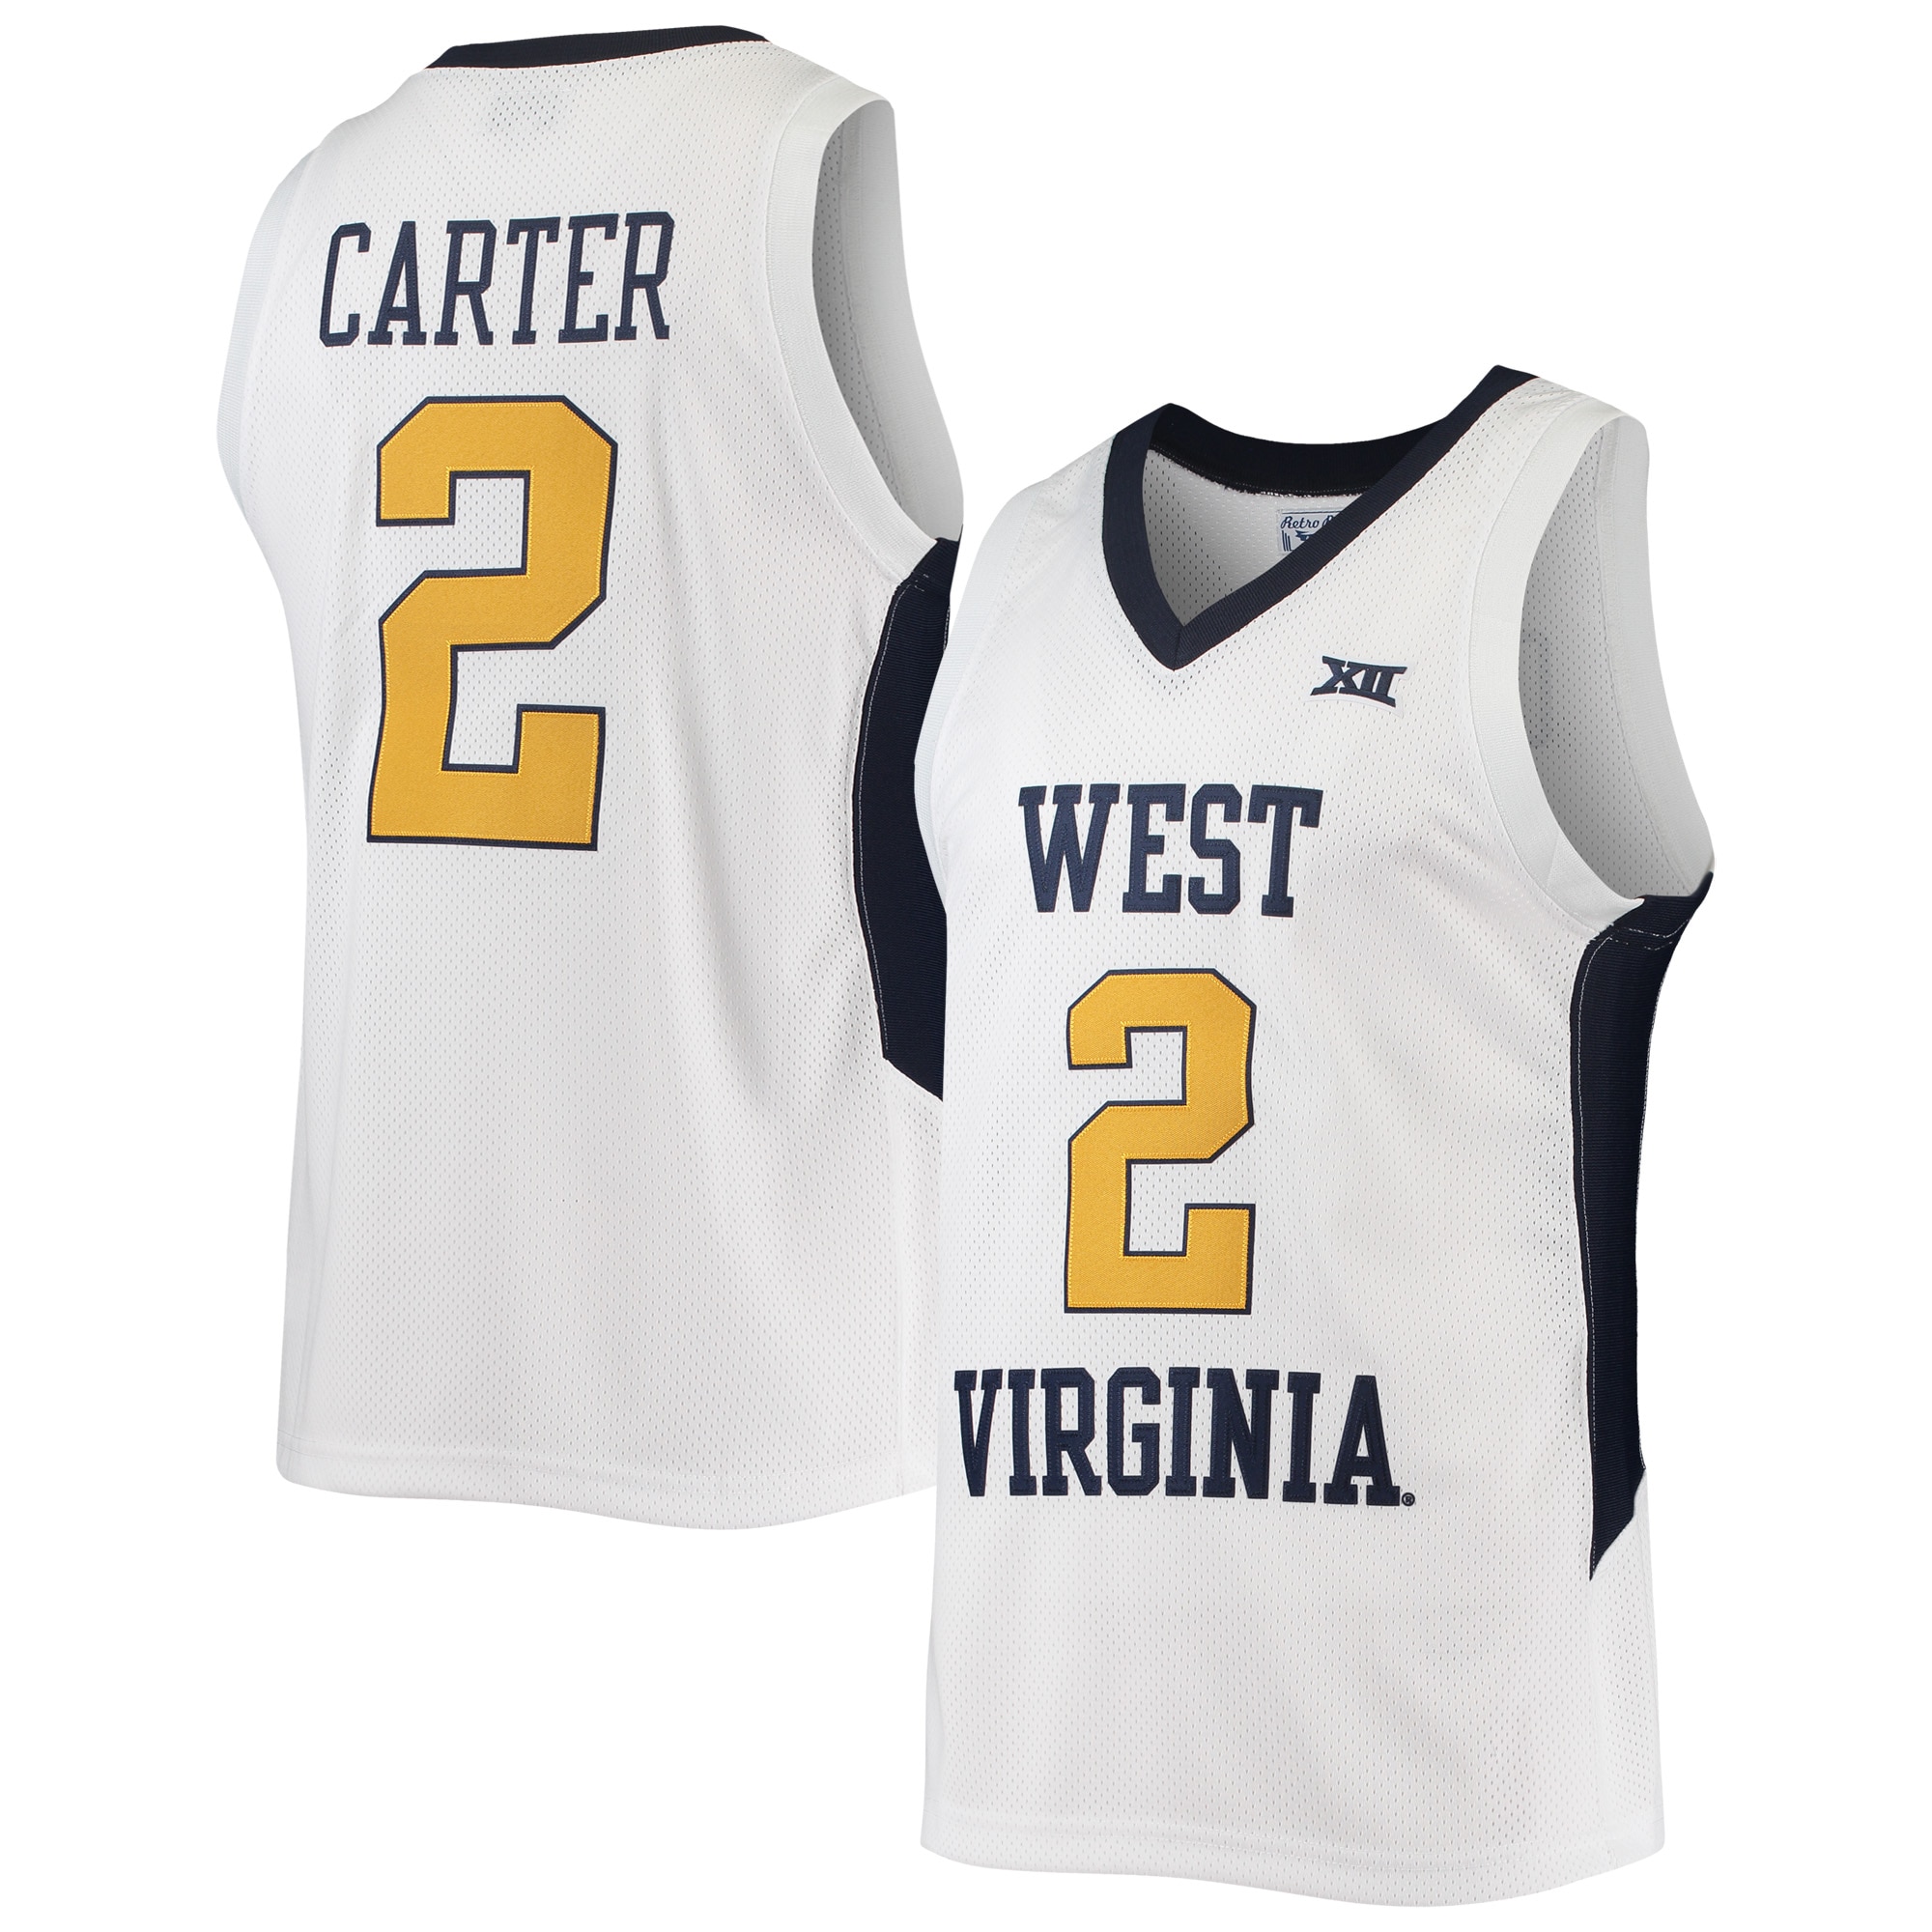 Jevon Carter West Virginia Mountaineers Original Retro Brand Commemorative Classic Basketball Jersey - White For Youth Women Men